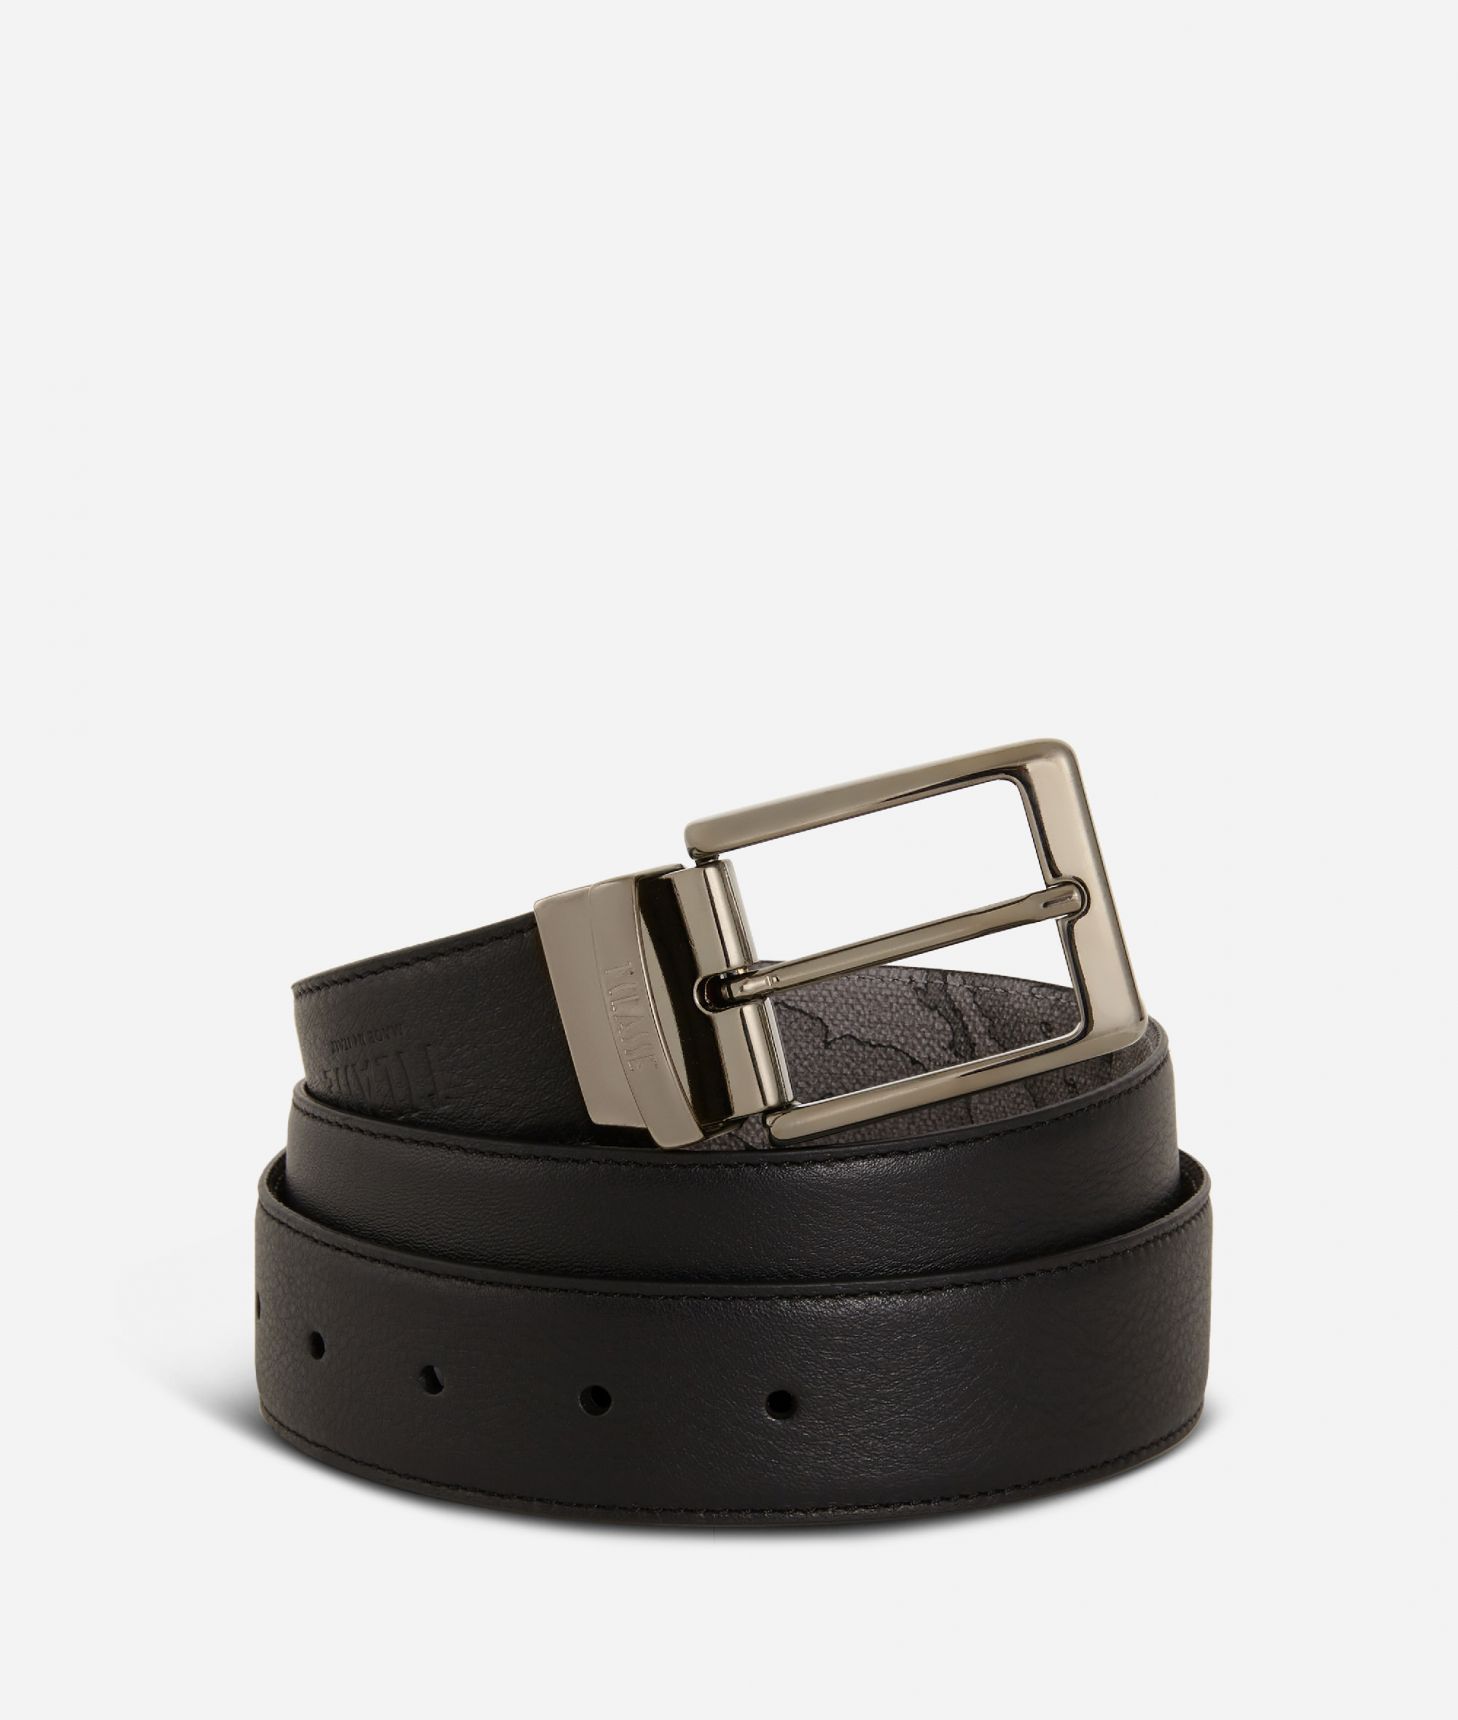 Men's belt leather grey,front